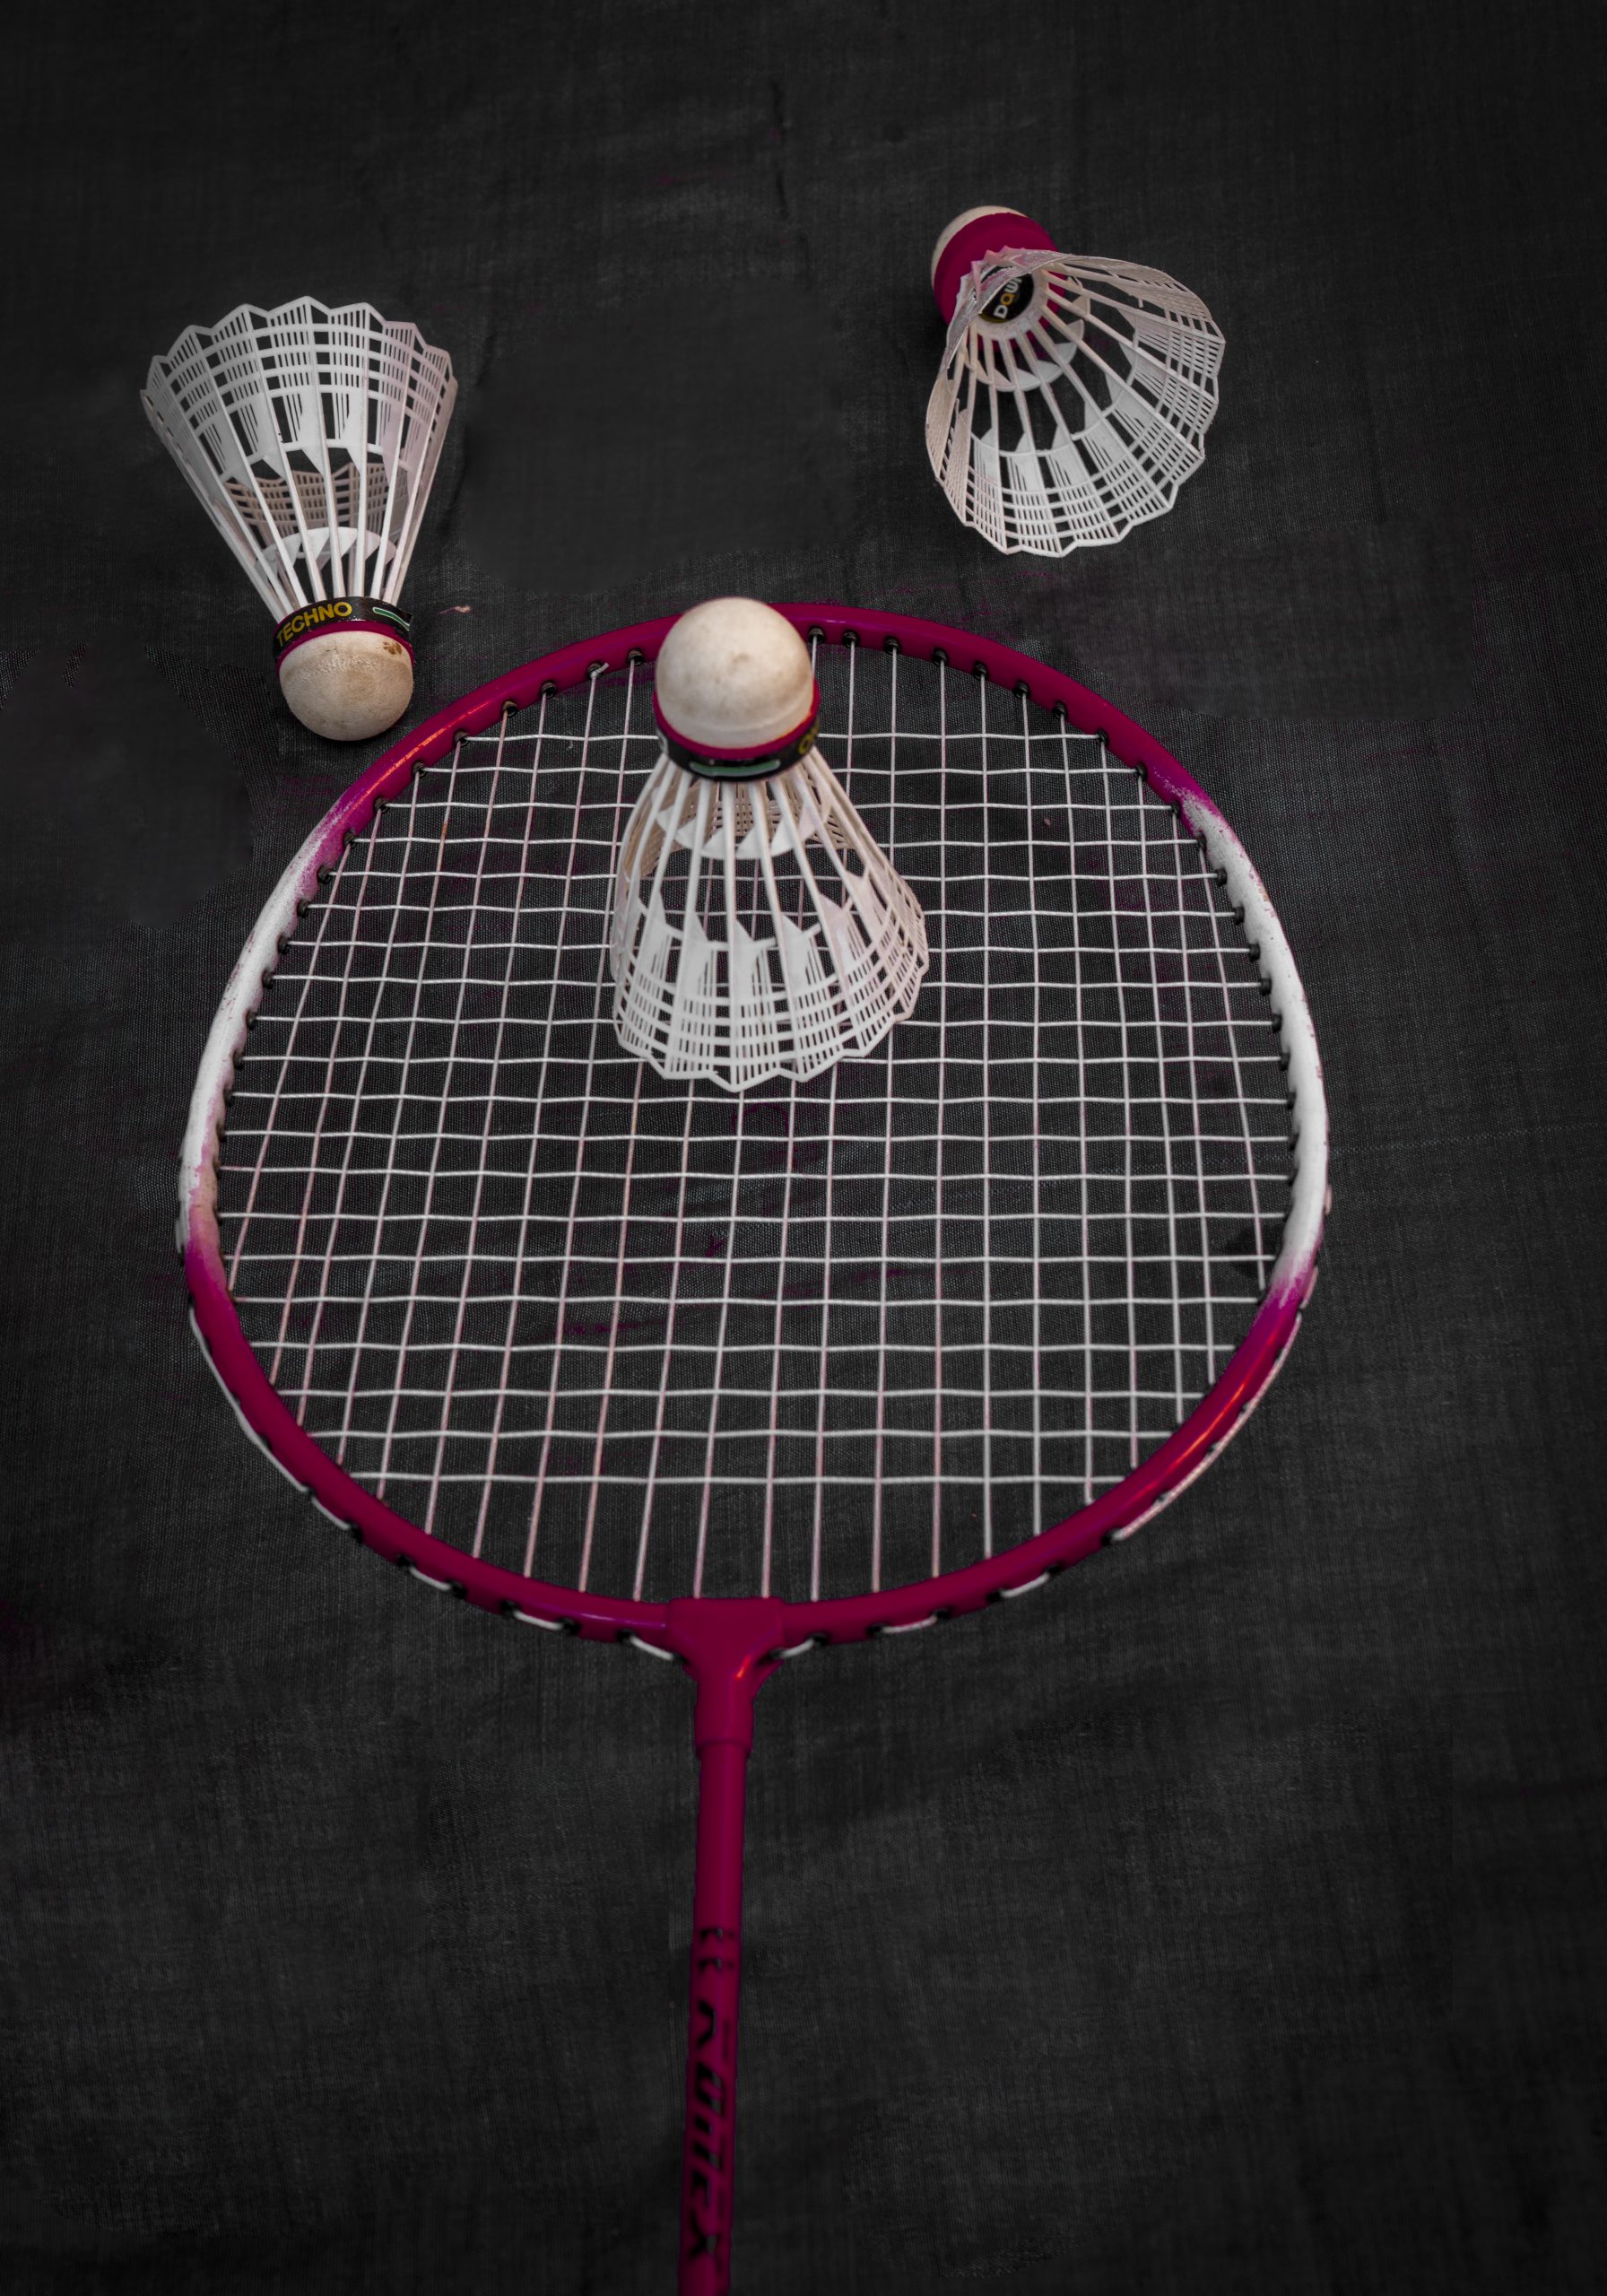 Shuttlecocks and badminton racket